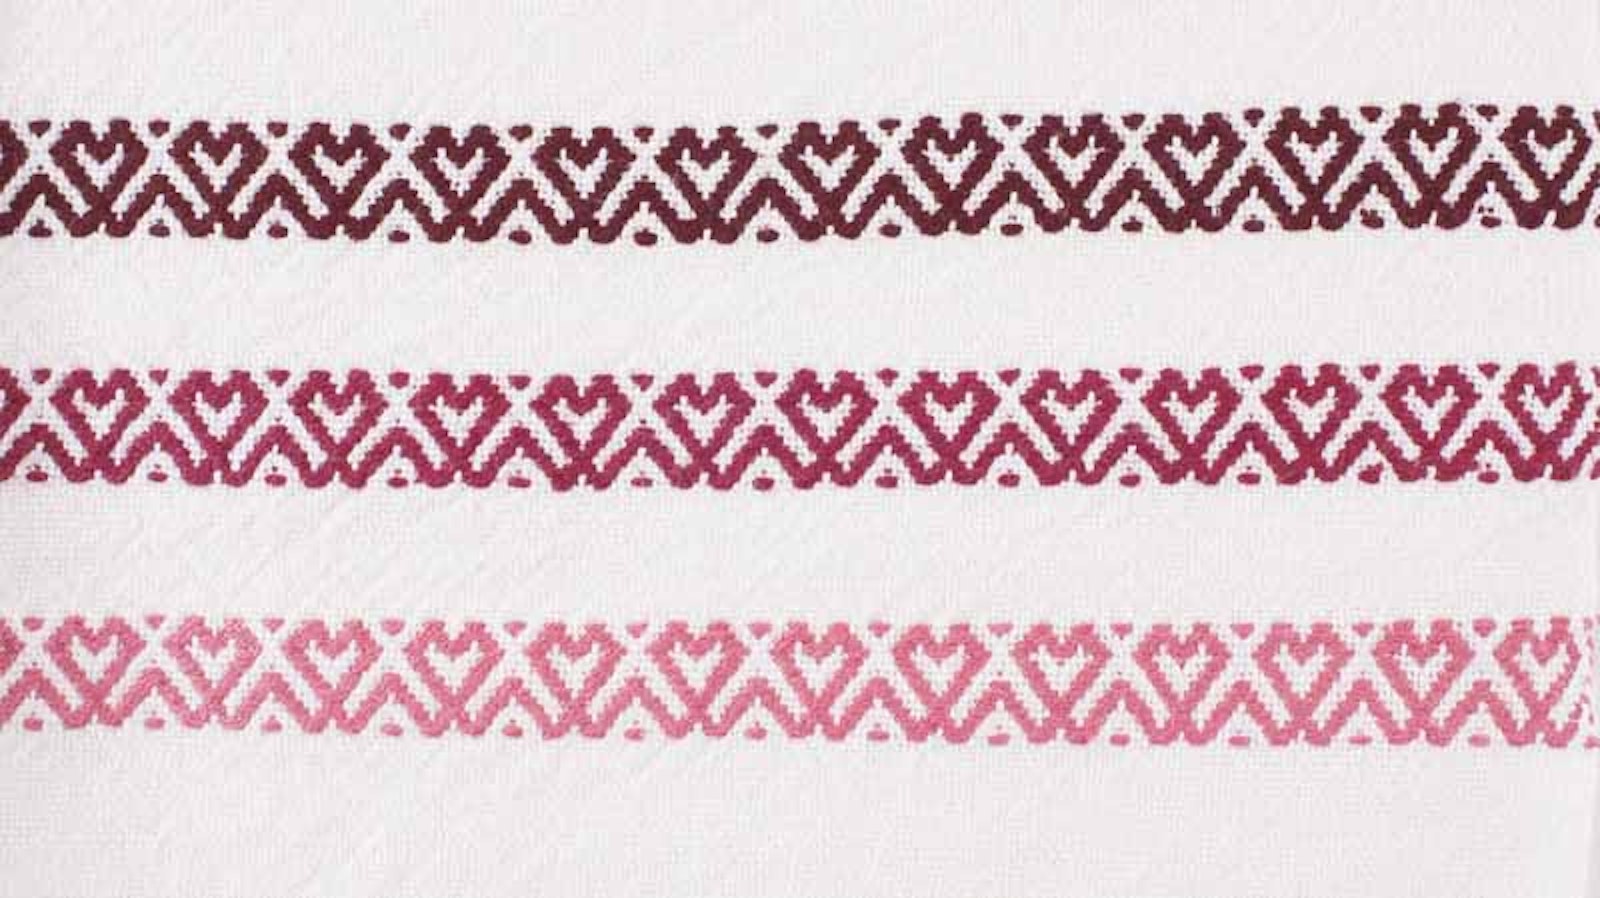 ePattern Swedish Weave Towels Heart Chain - Leisure Arts